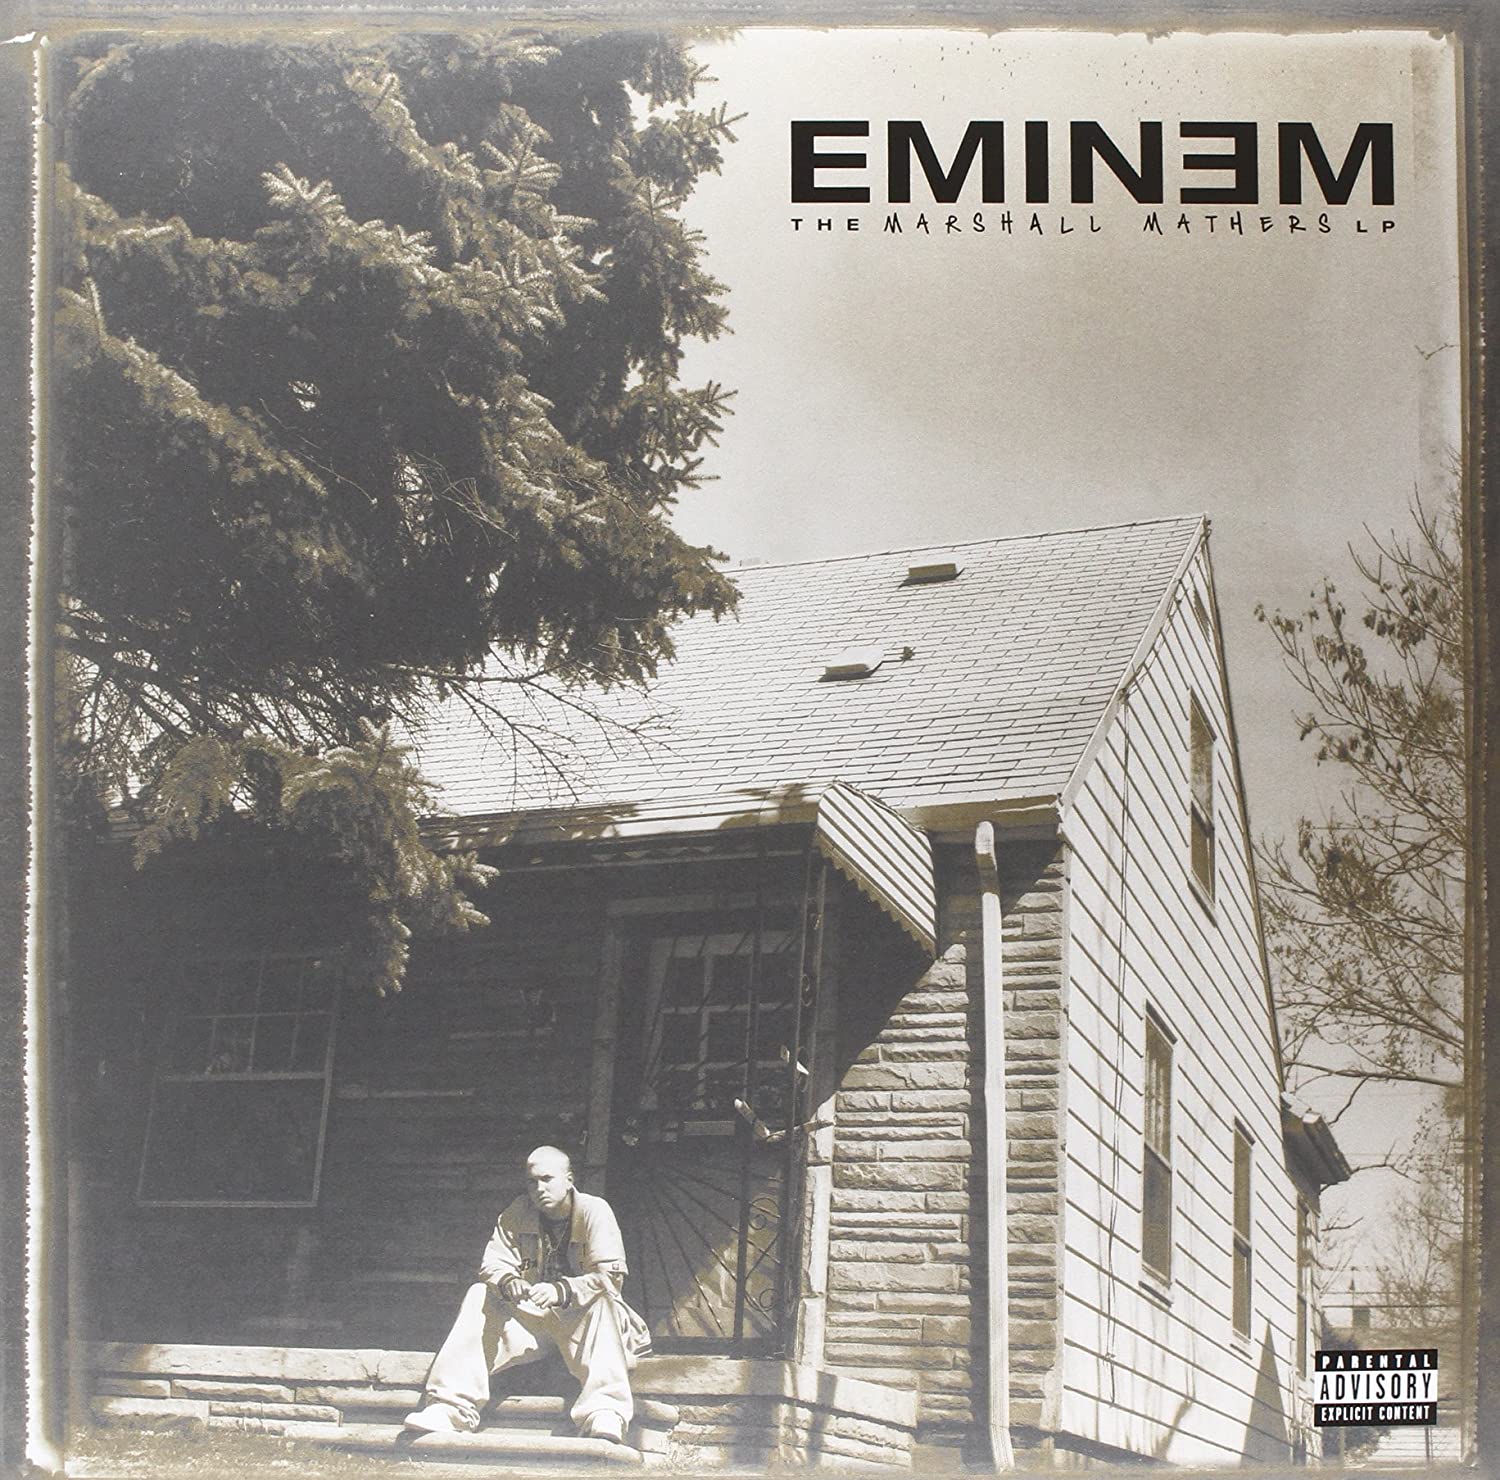 Marshall Mathers LP, Album Eminem